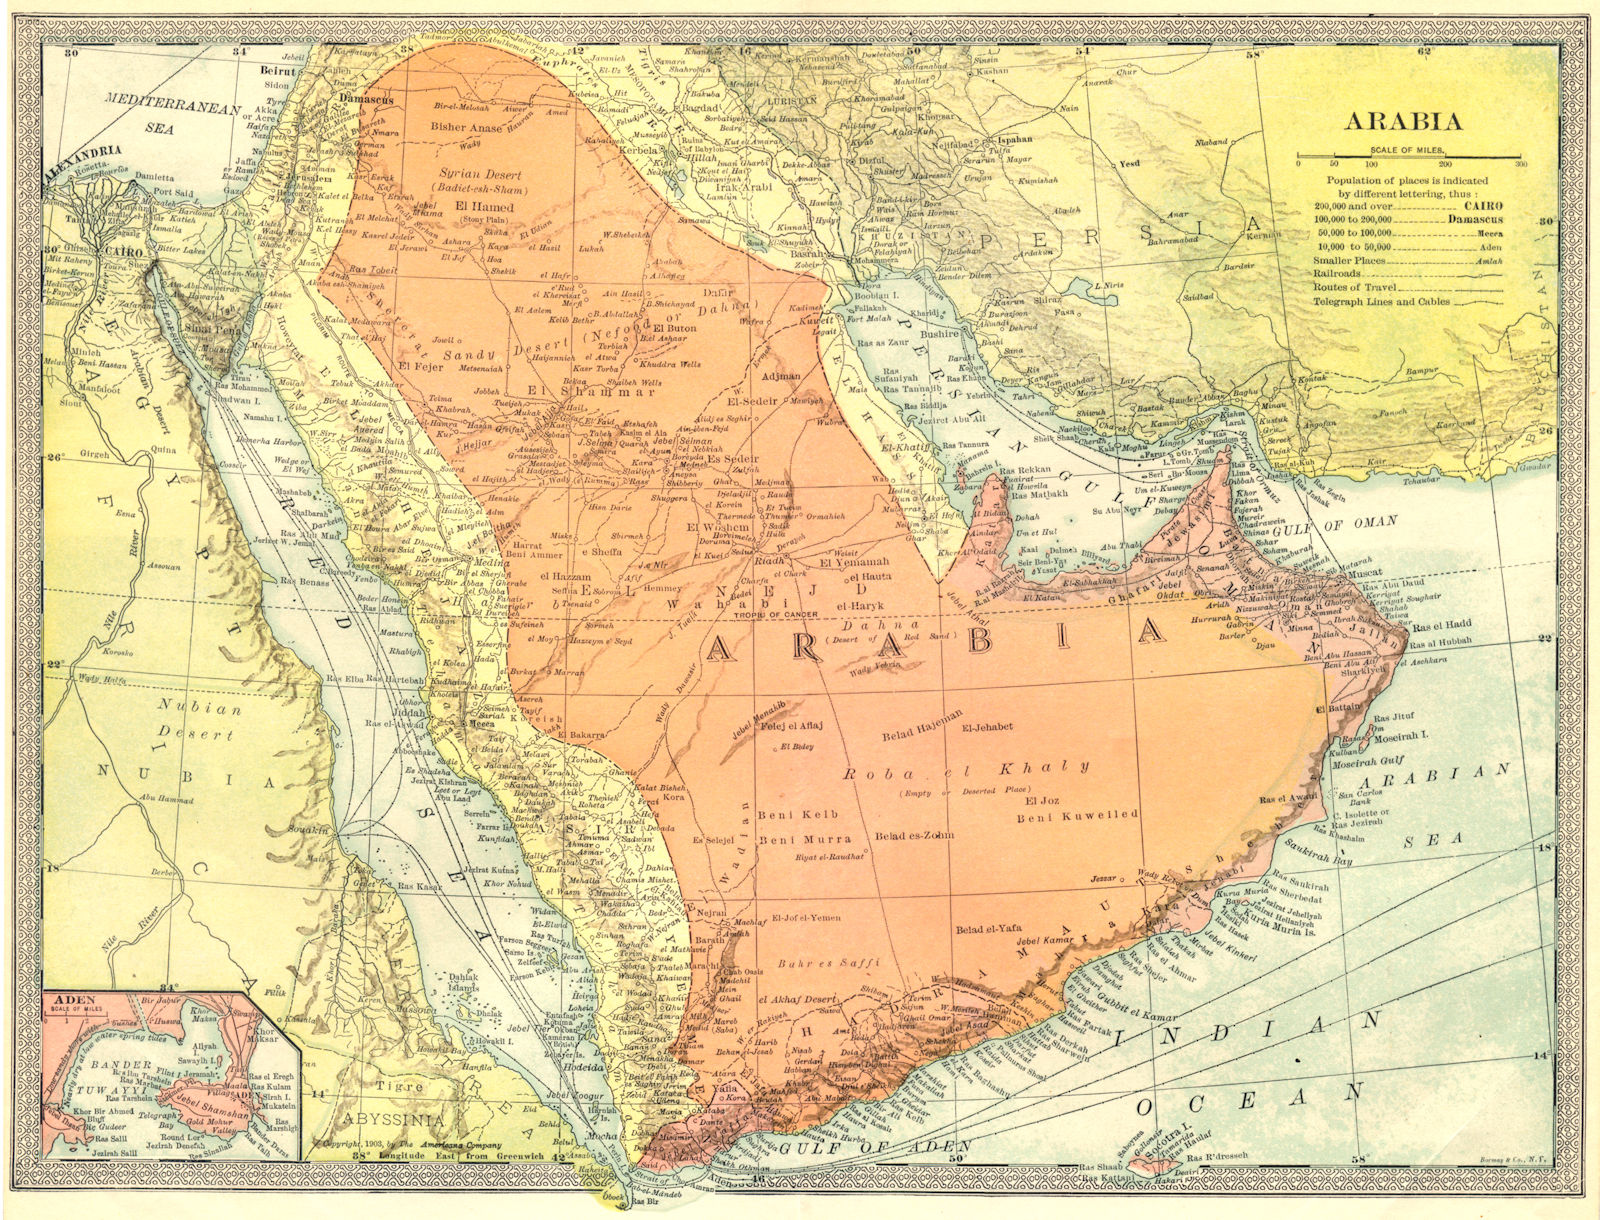 ARABIA. Ottoman Hejaz/Hassa. Debay (Dubai) Abu Thabi (Abu Dhabi). Aden 1907 map